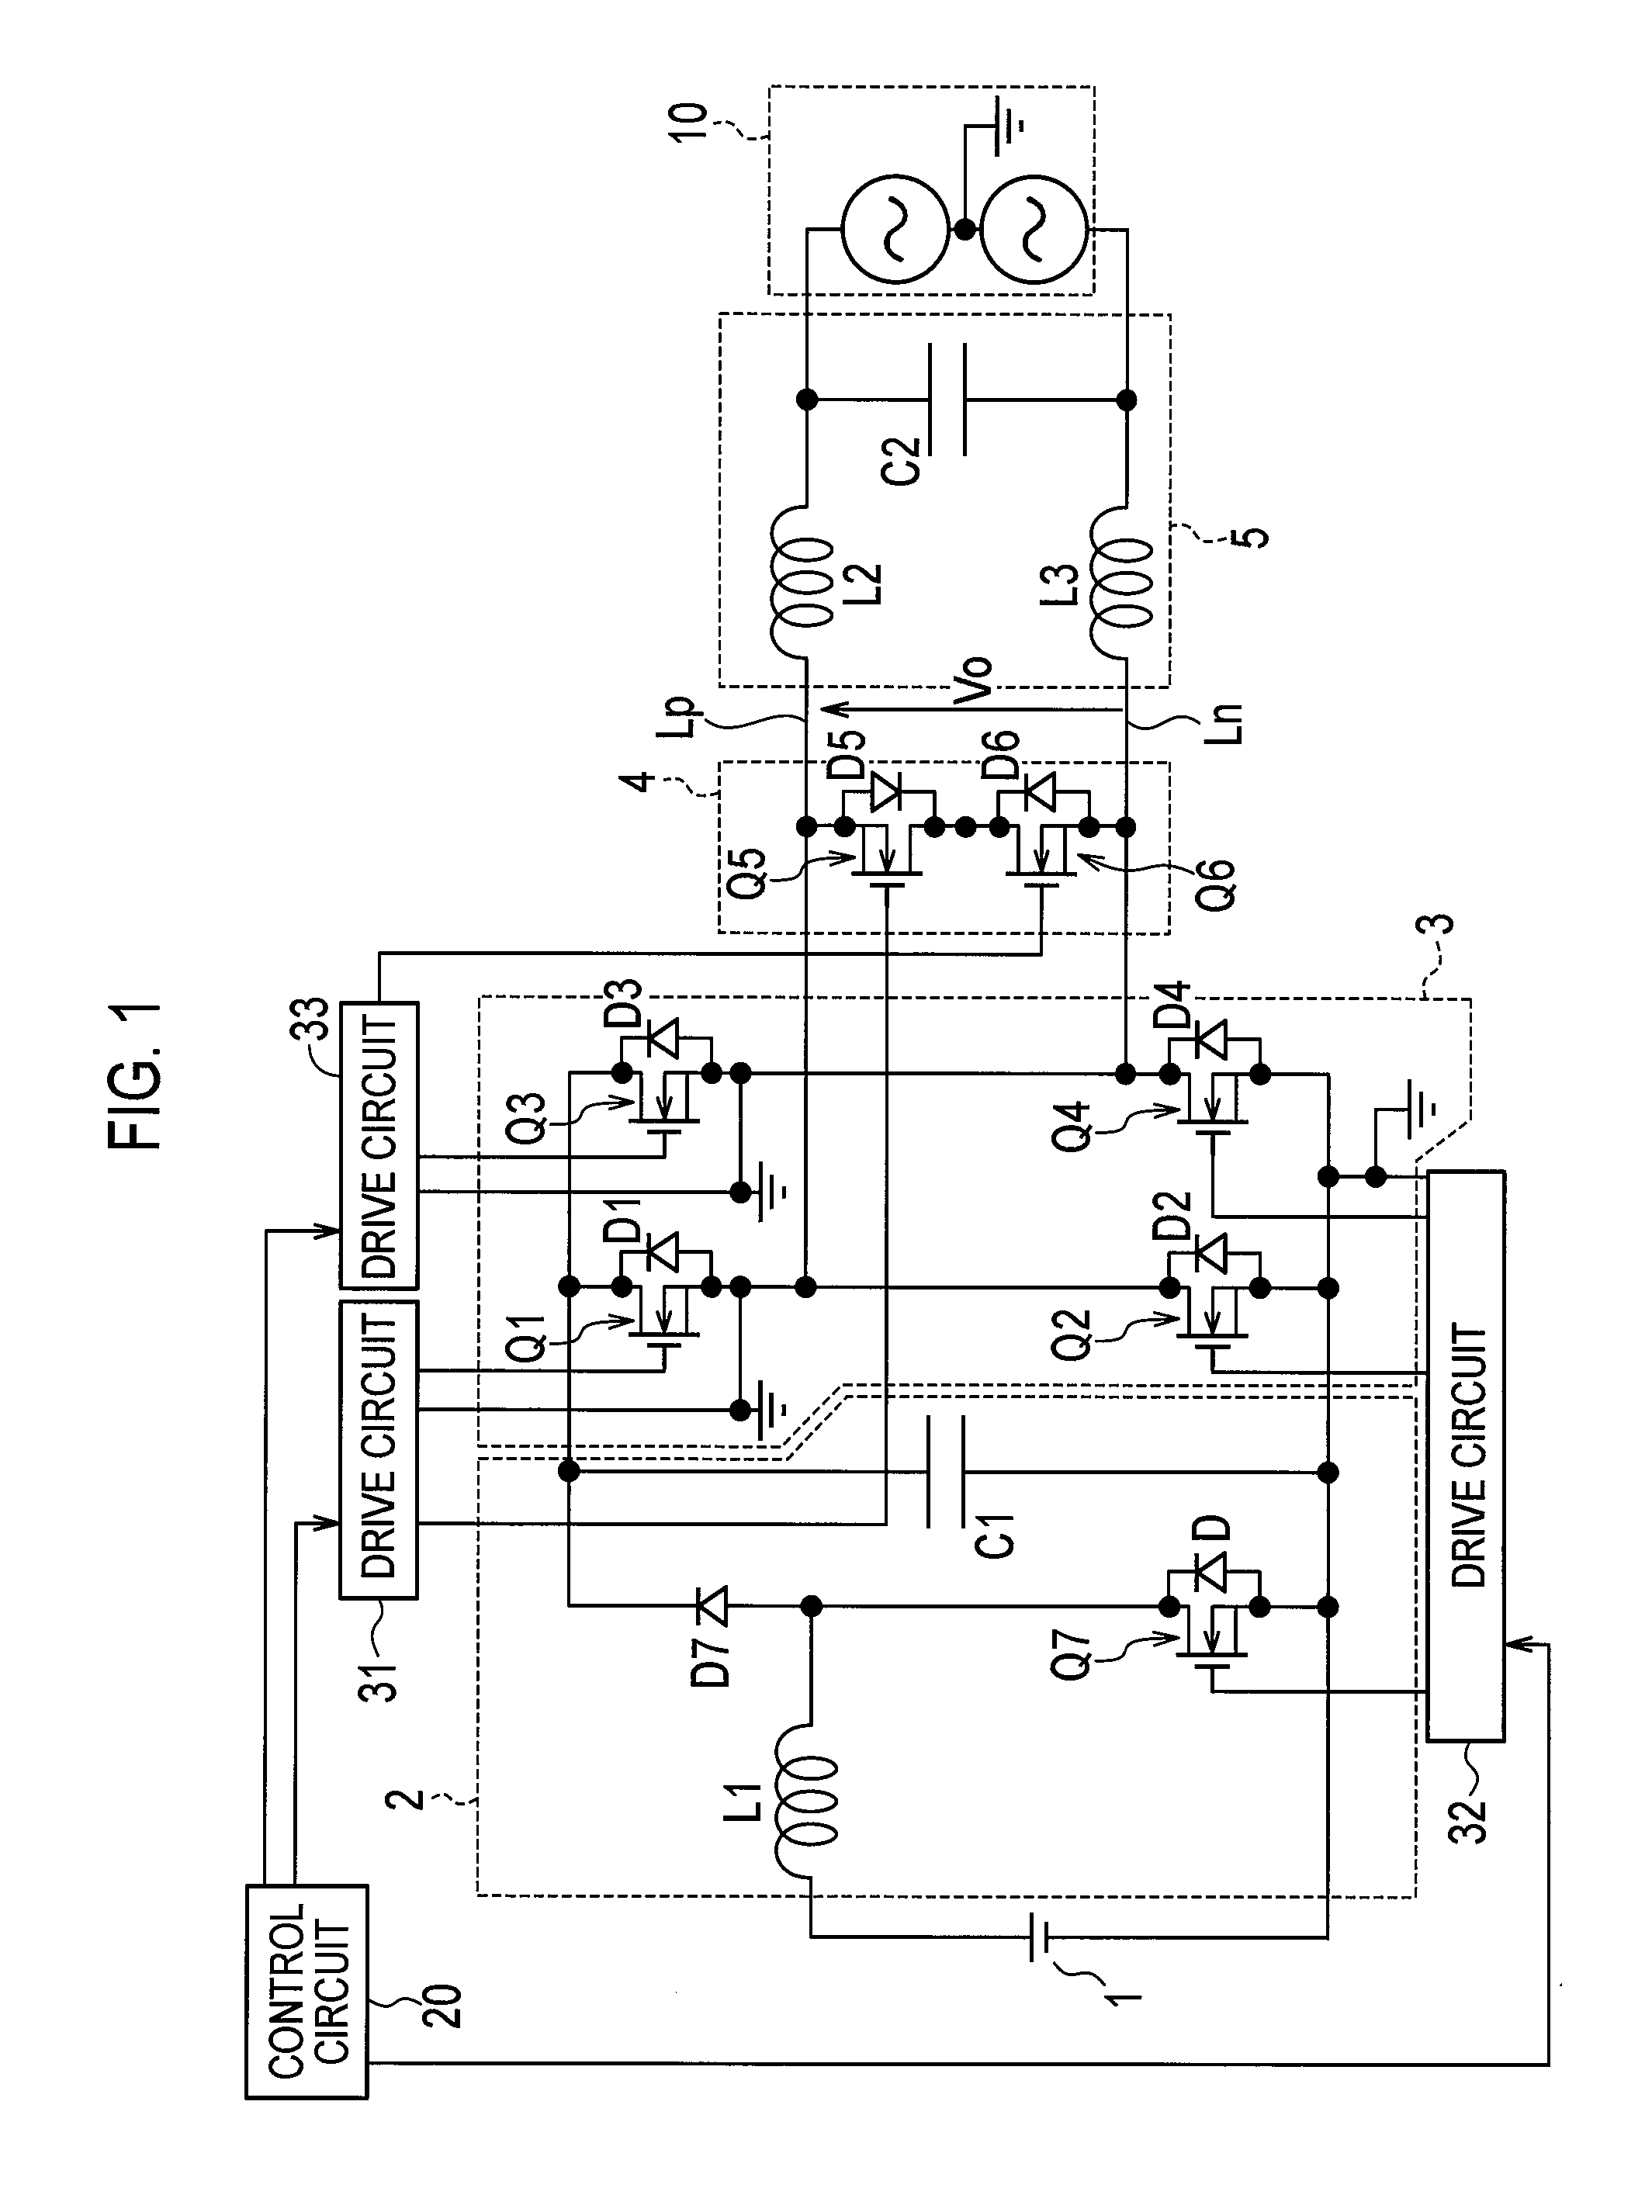 Power converting apparatus, grid interconnection apparatus and grid interconnection system